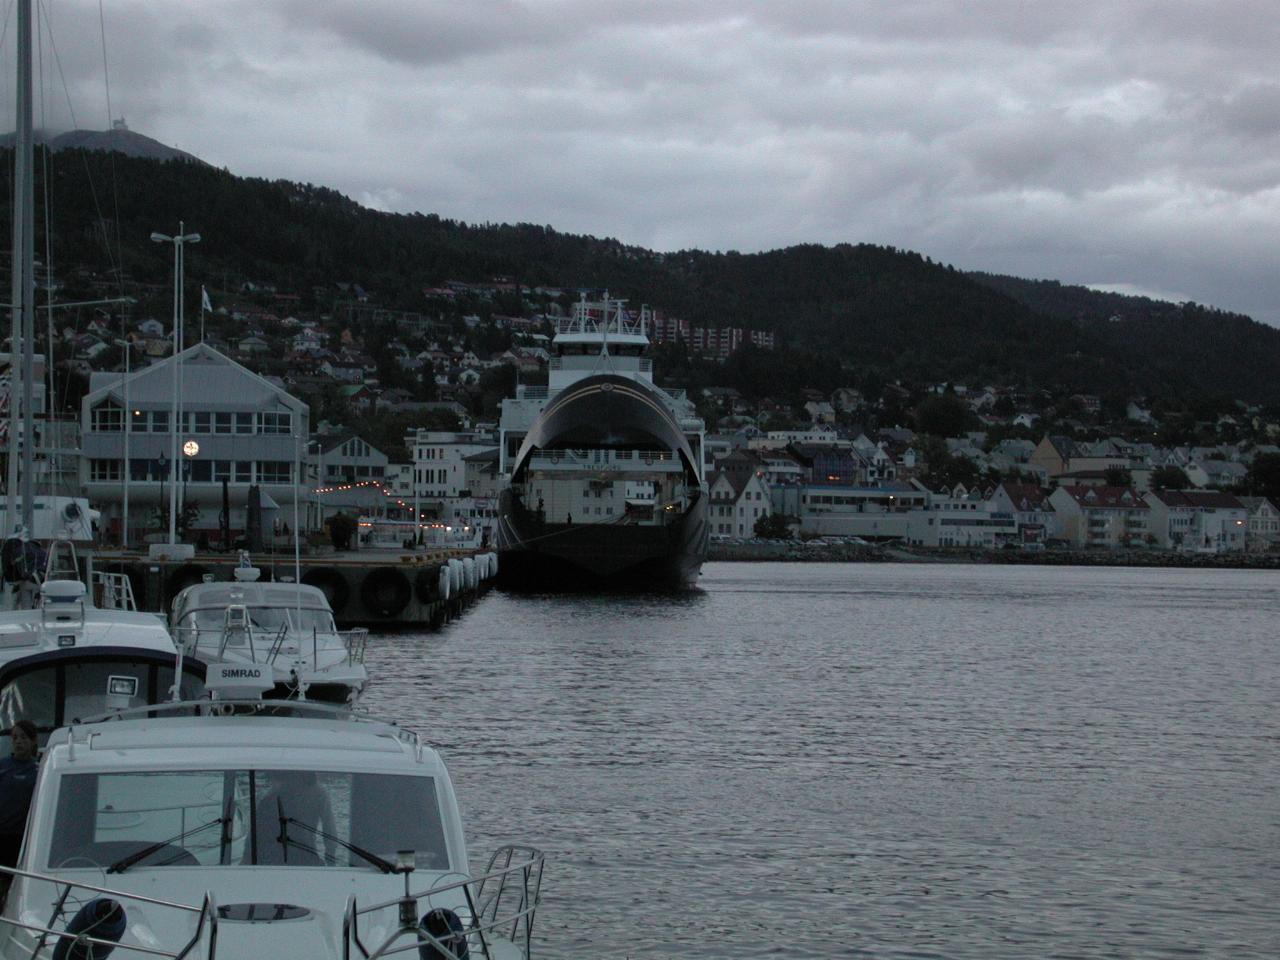 KPLU Viking Jazz: Local car ferry with its 